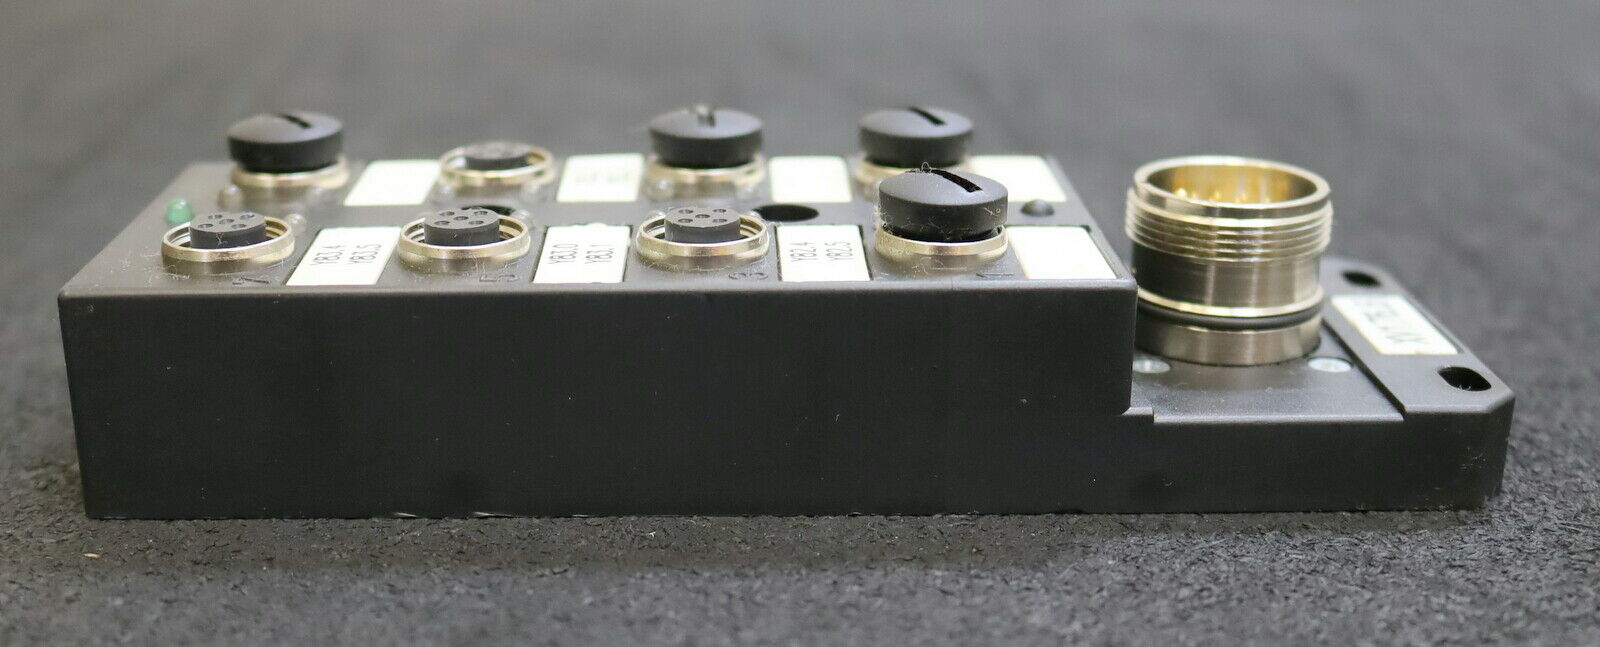 MURR ELEKTRONIK M12 Sensor-/Aktor-Verteiler 8-fach 5-pin female Buchsen ID 27781